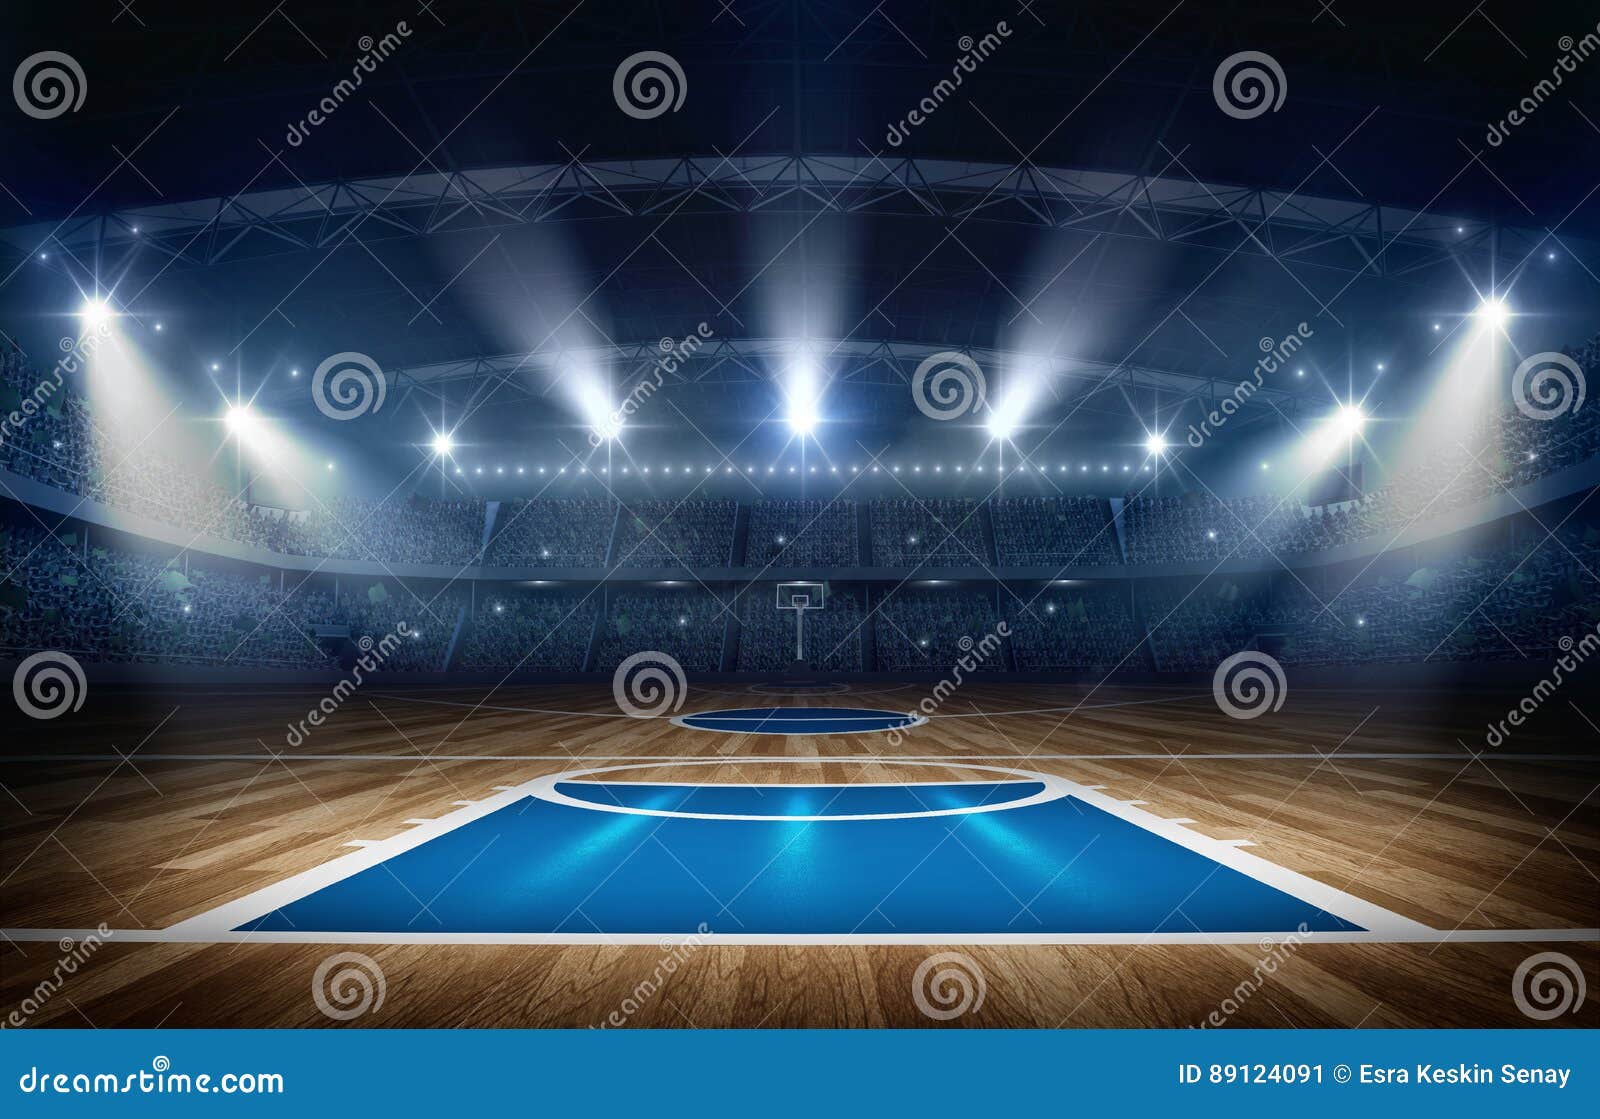 basketball arena,3d rendering